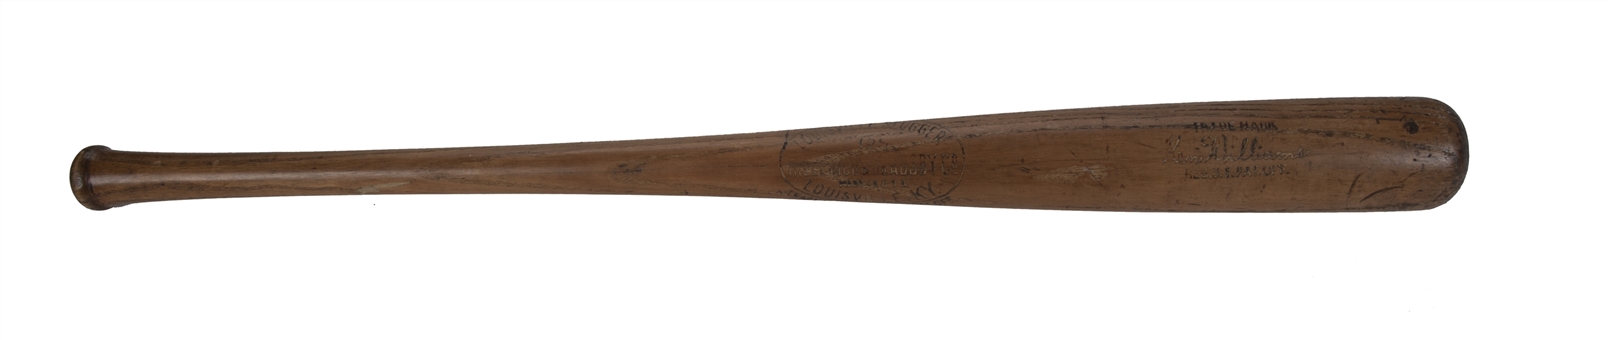 1923-1925 Ken Williams Game Used Hillerich & Bradsby Pre Model Bat (PSA/DNA)